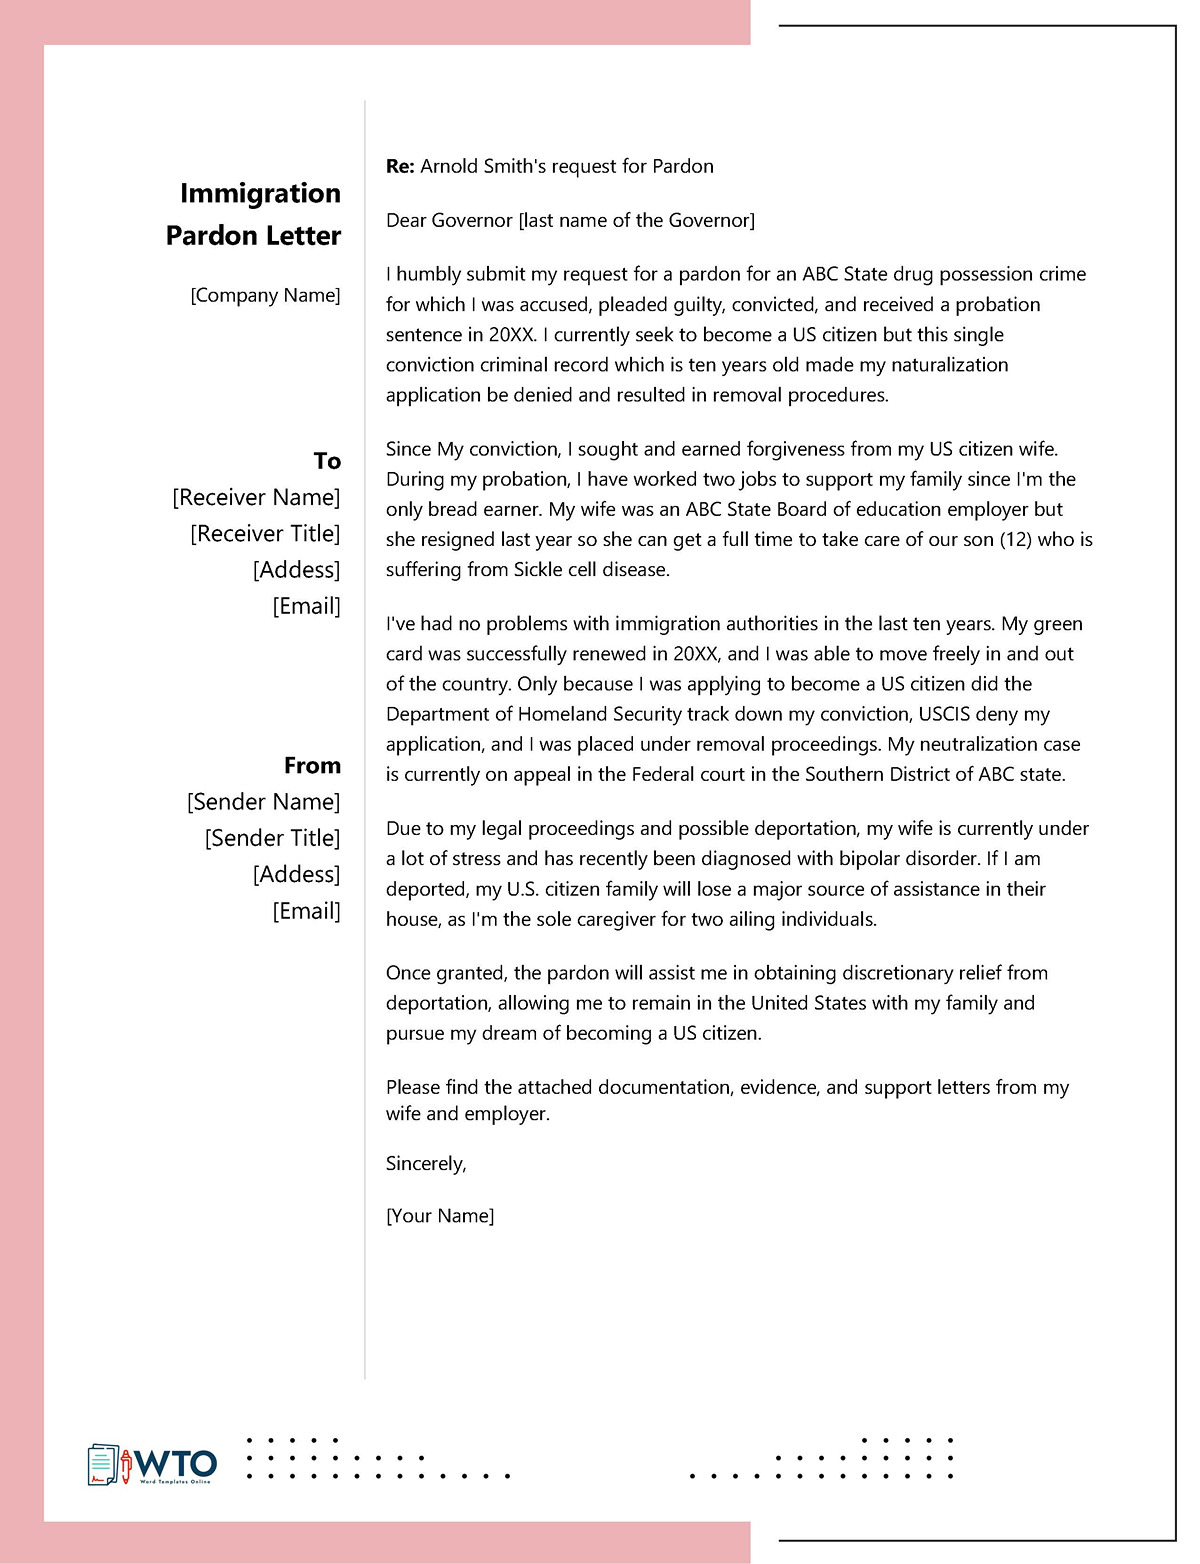 Immigration Pardon Letter Example - Sample Document